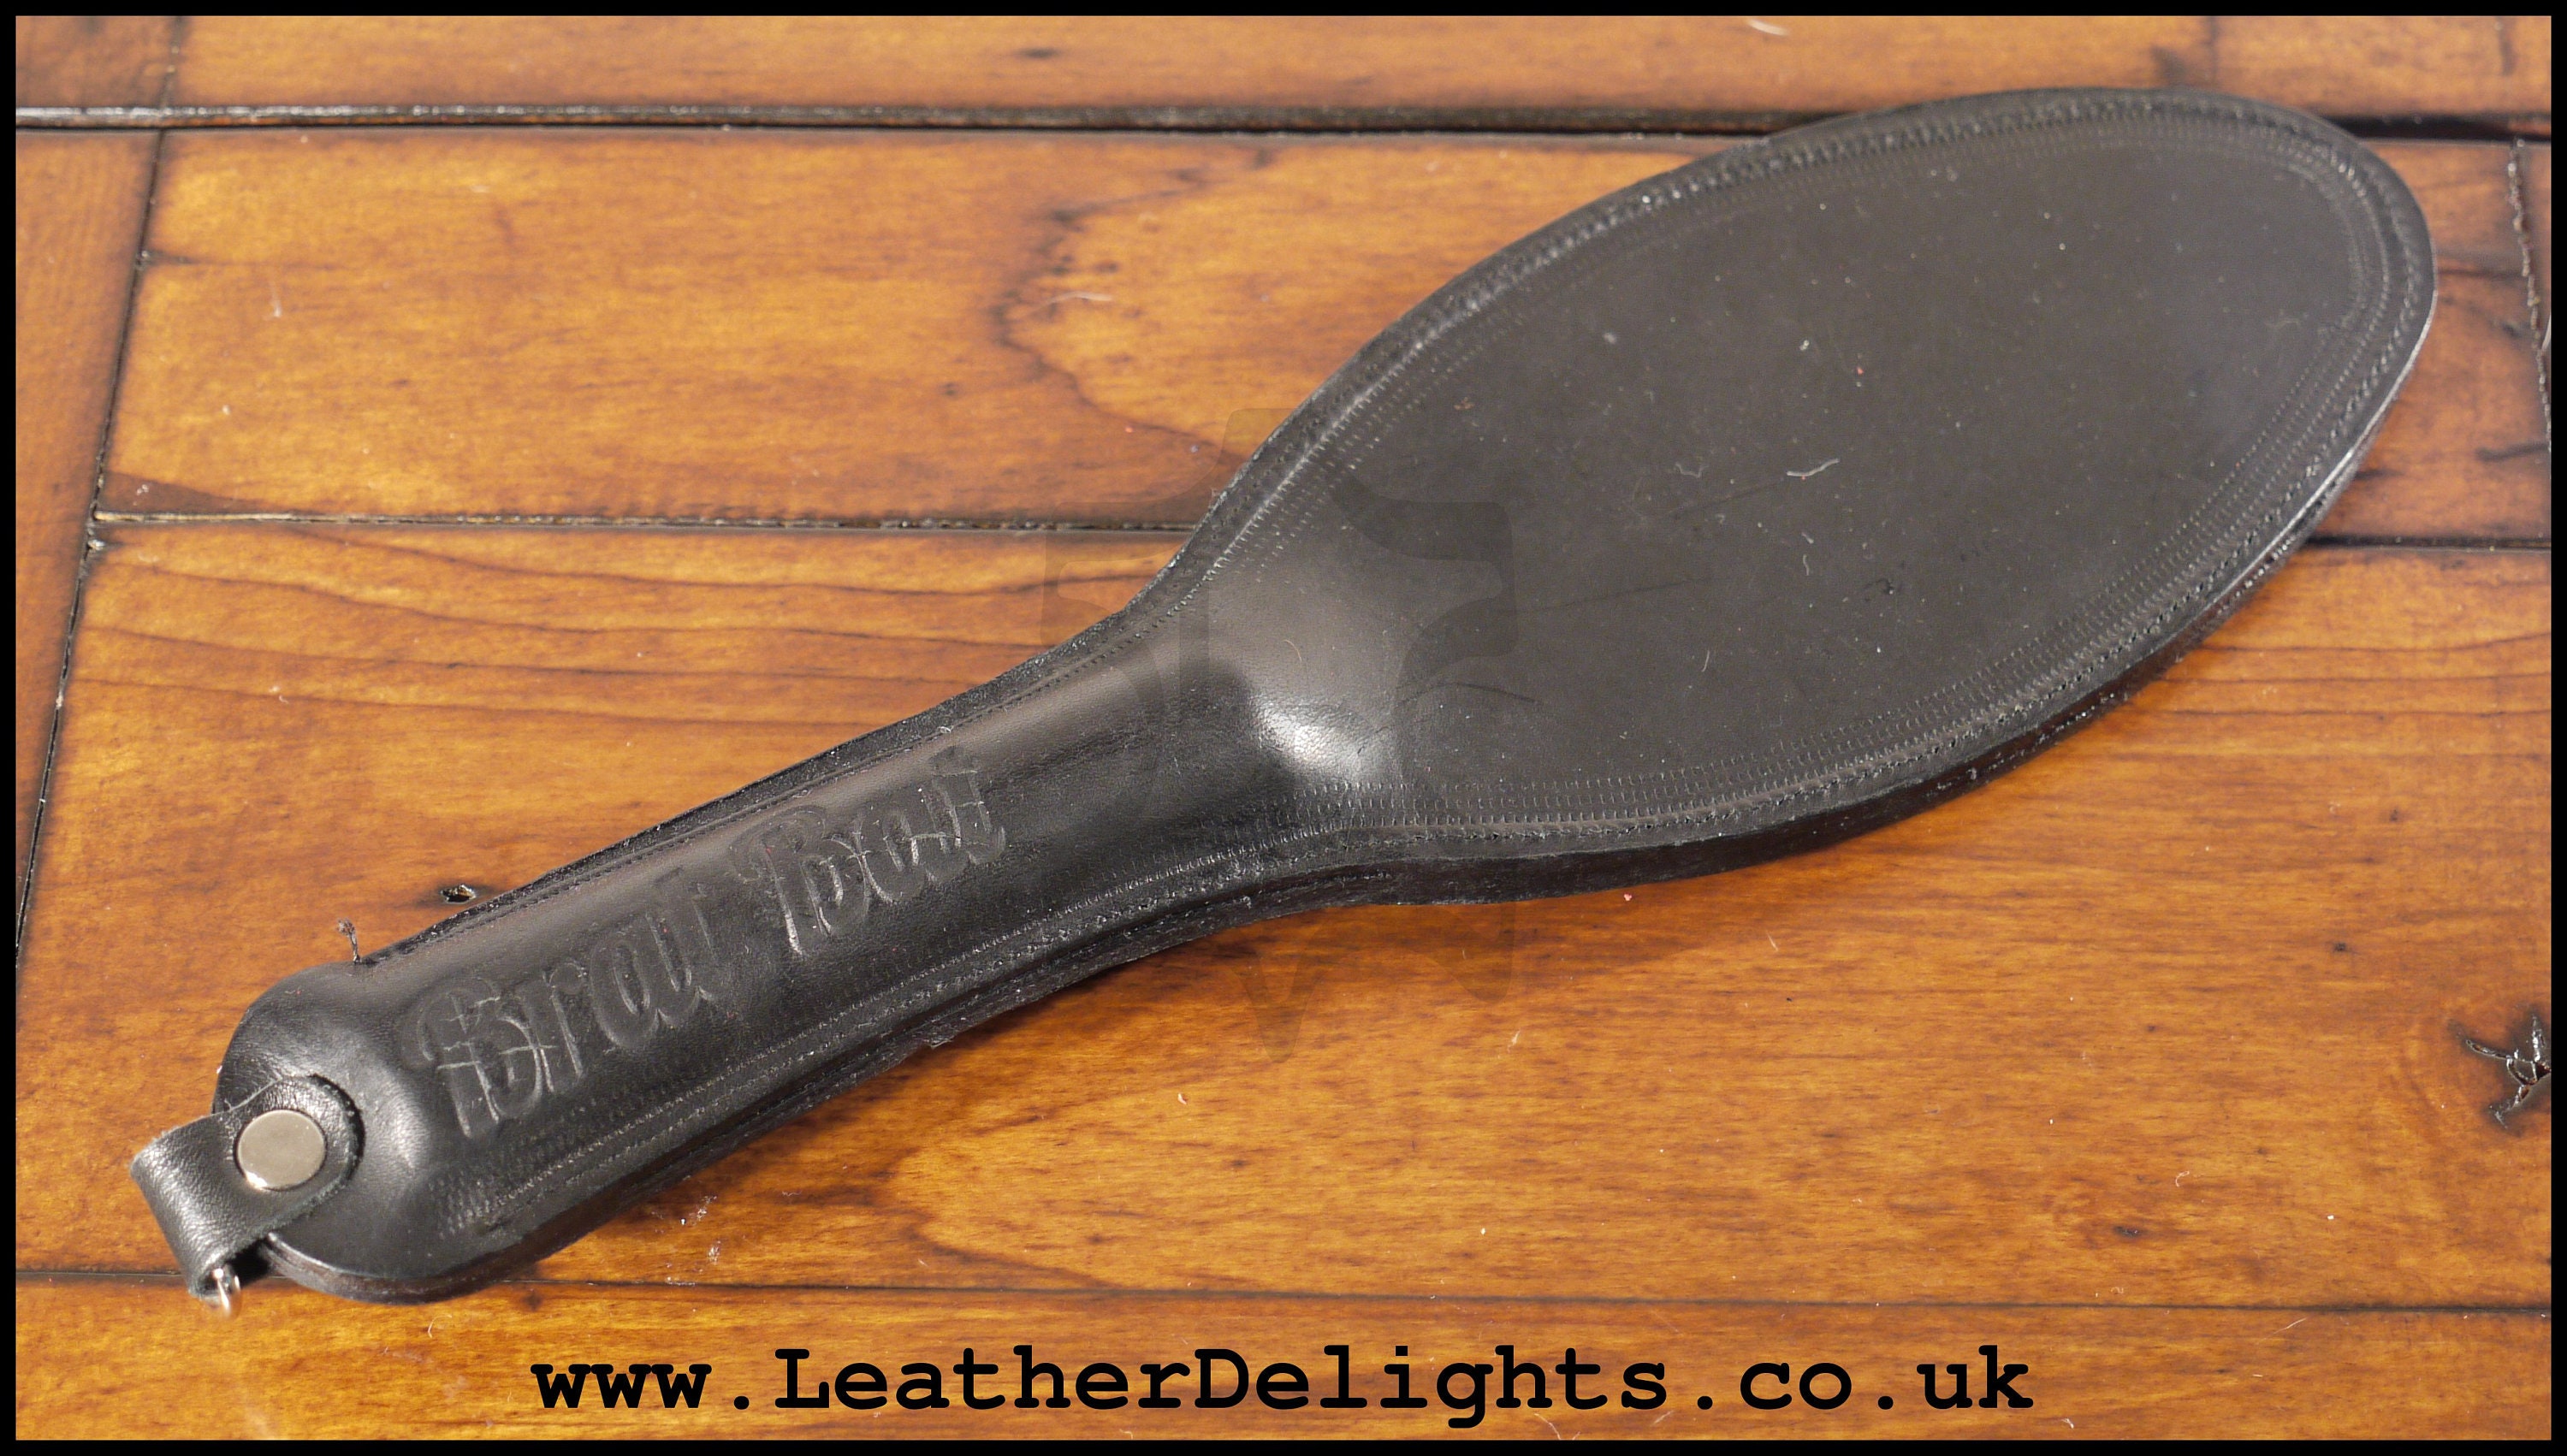 The Stinger Leather Paddle, BDSM Spanking Paddles